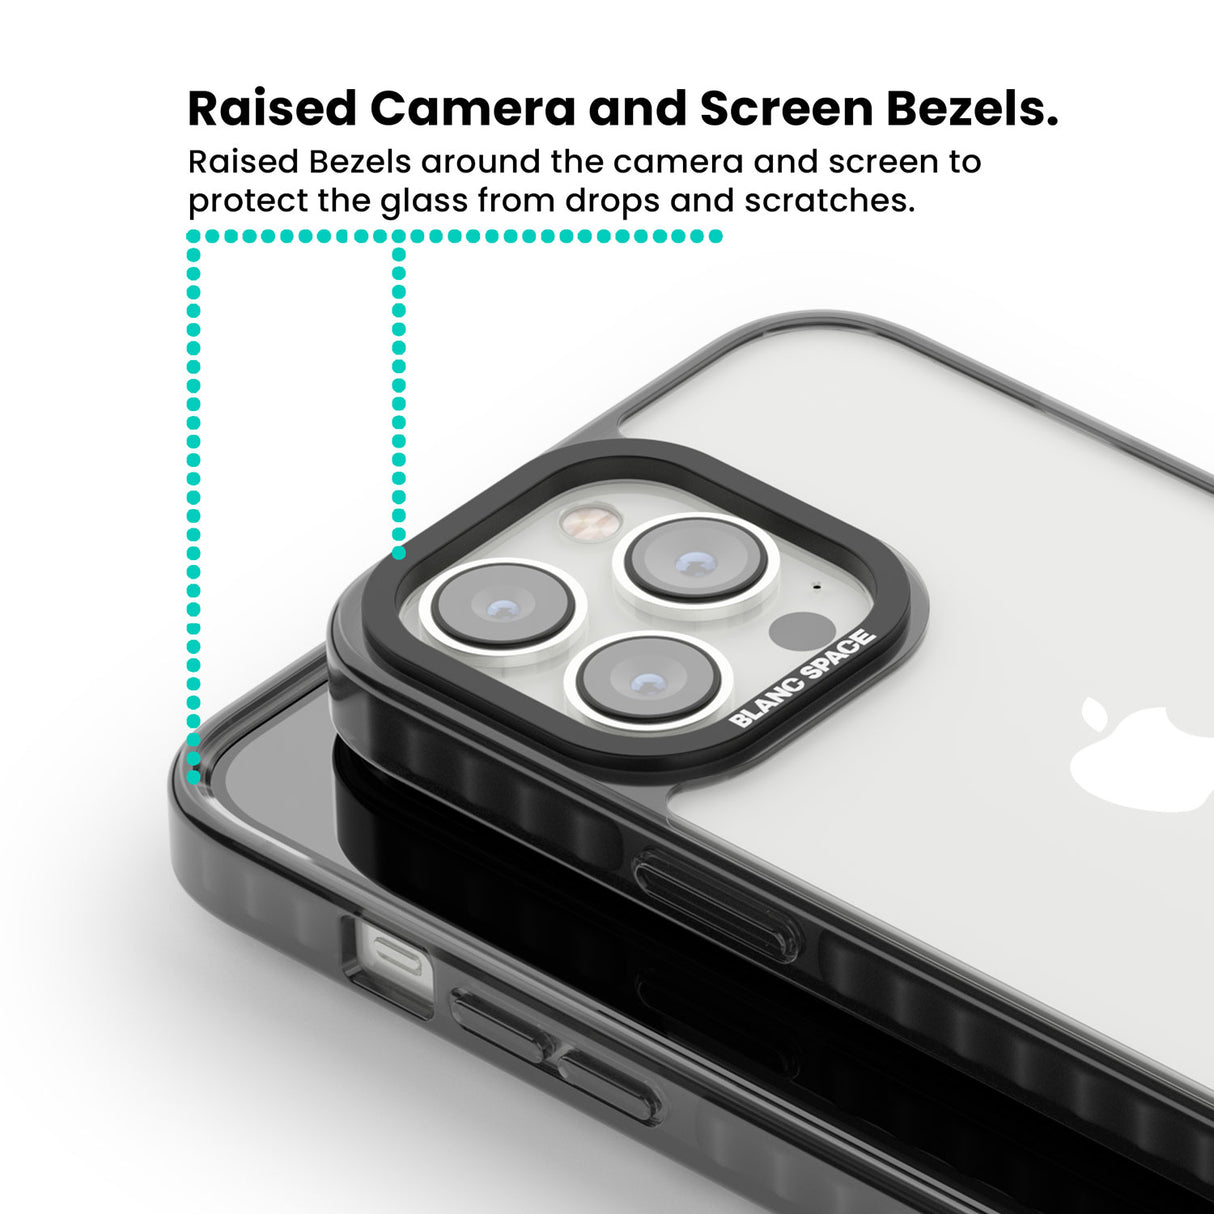 Celestial Zodiac - Leo Black Impact Phone Case for iPhone 13 Pro, iPhone 14 Pro, iPhone 15 Pro